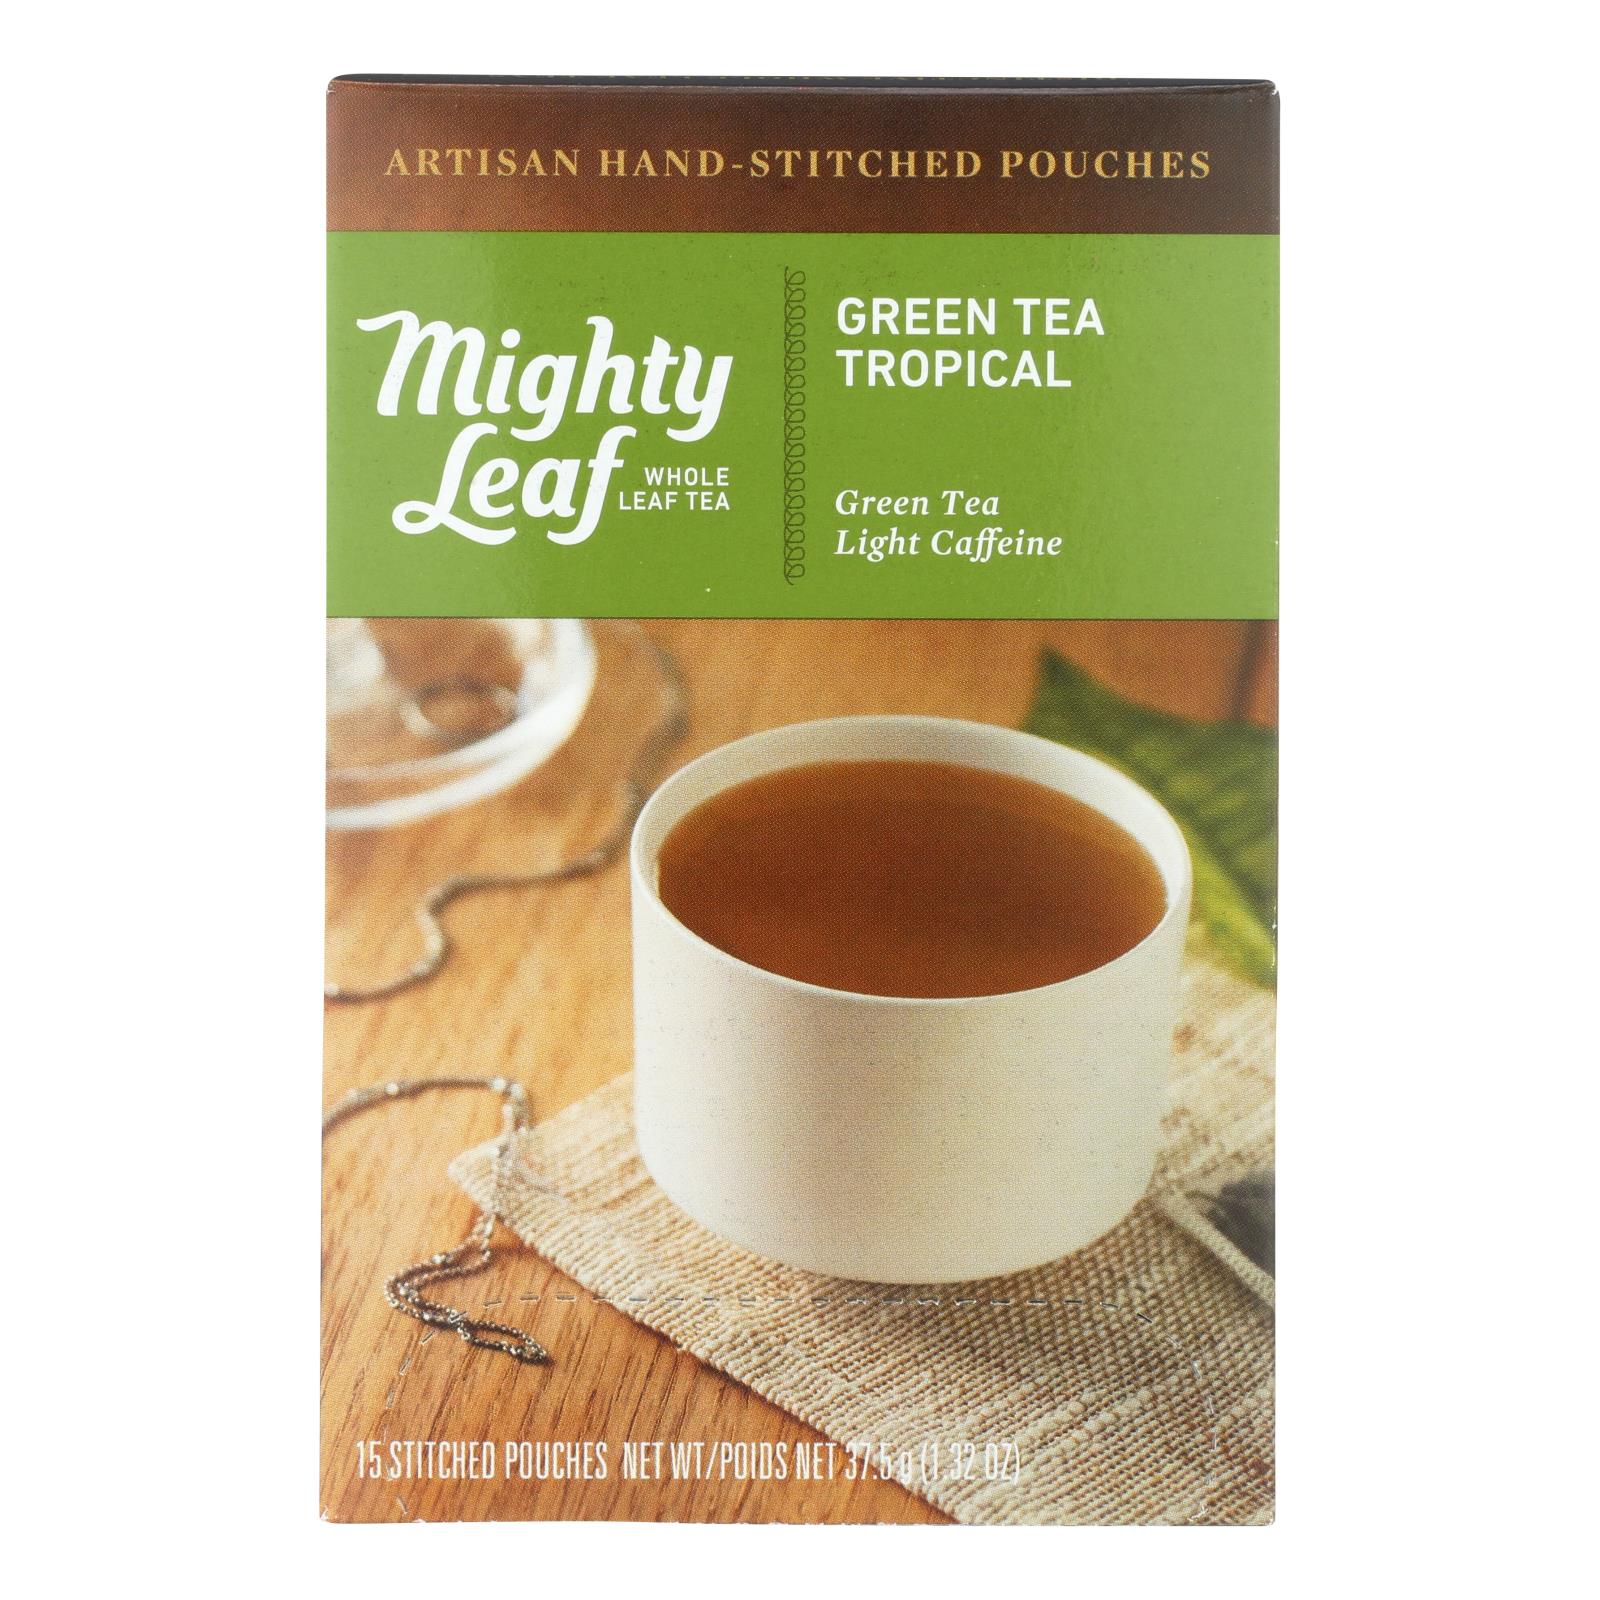 Mighty Leaf Tea - Tea Green Tropical Stched - 6개 묶음상품 - 15 BAG